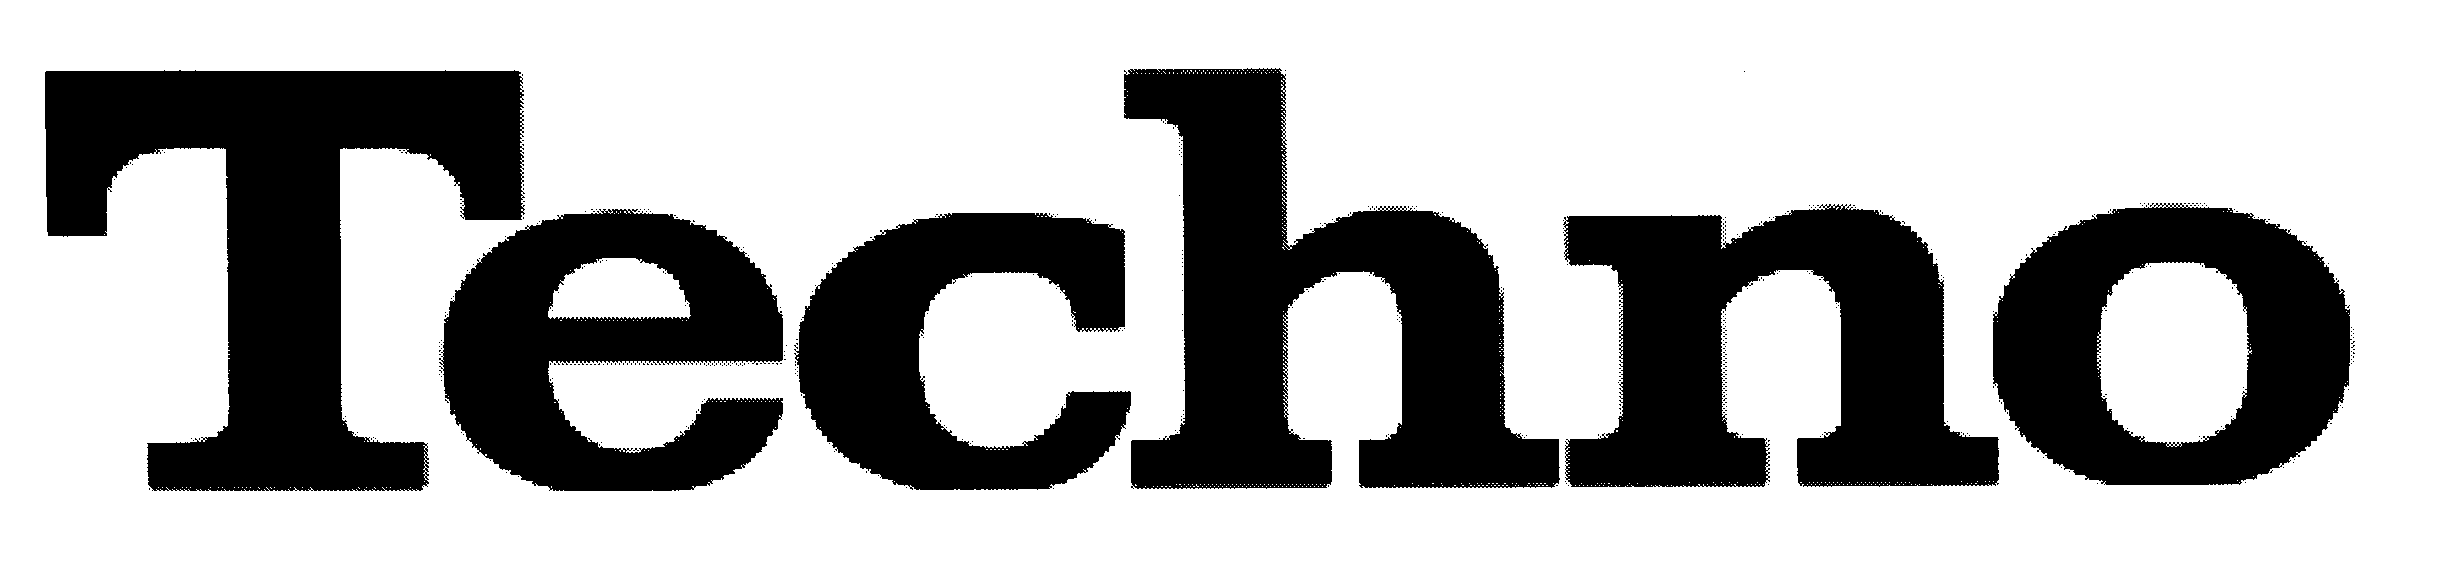 Trademark Logo TECHNO